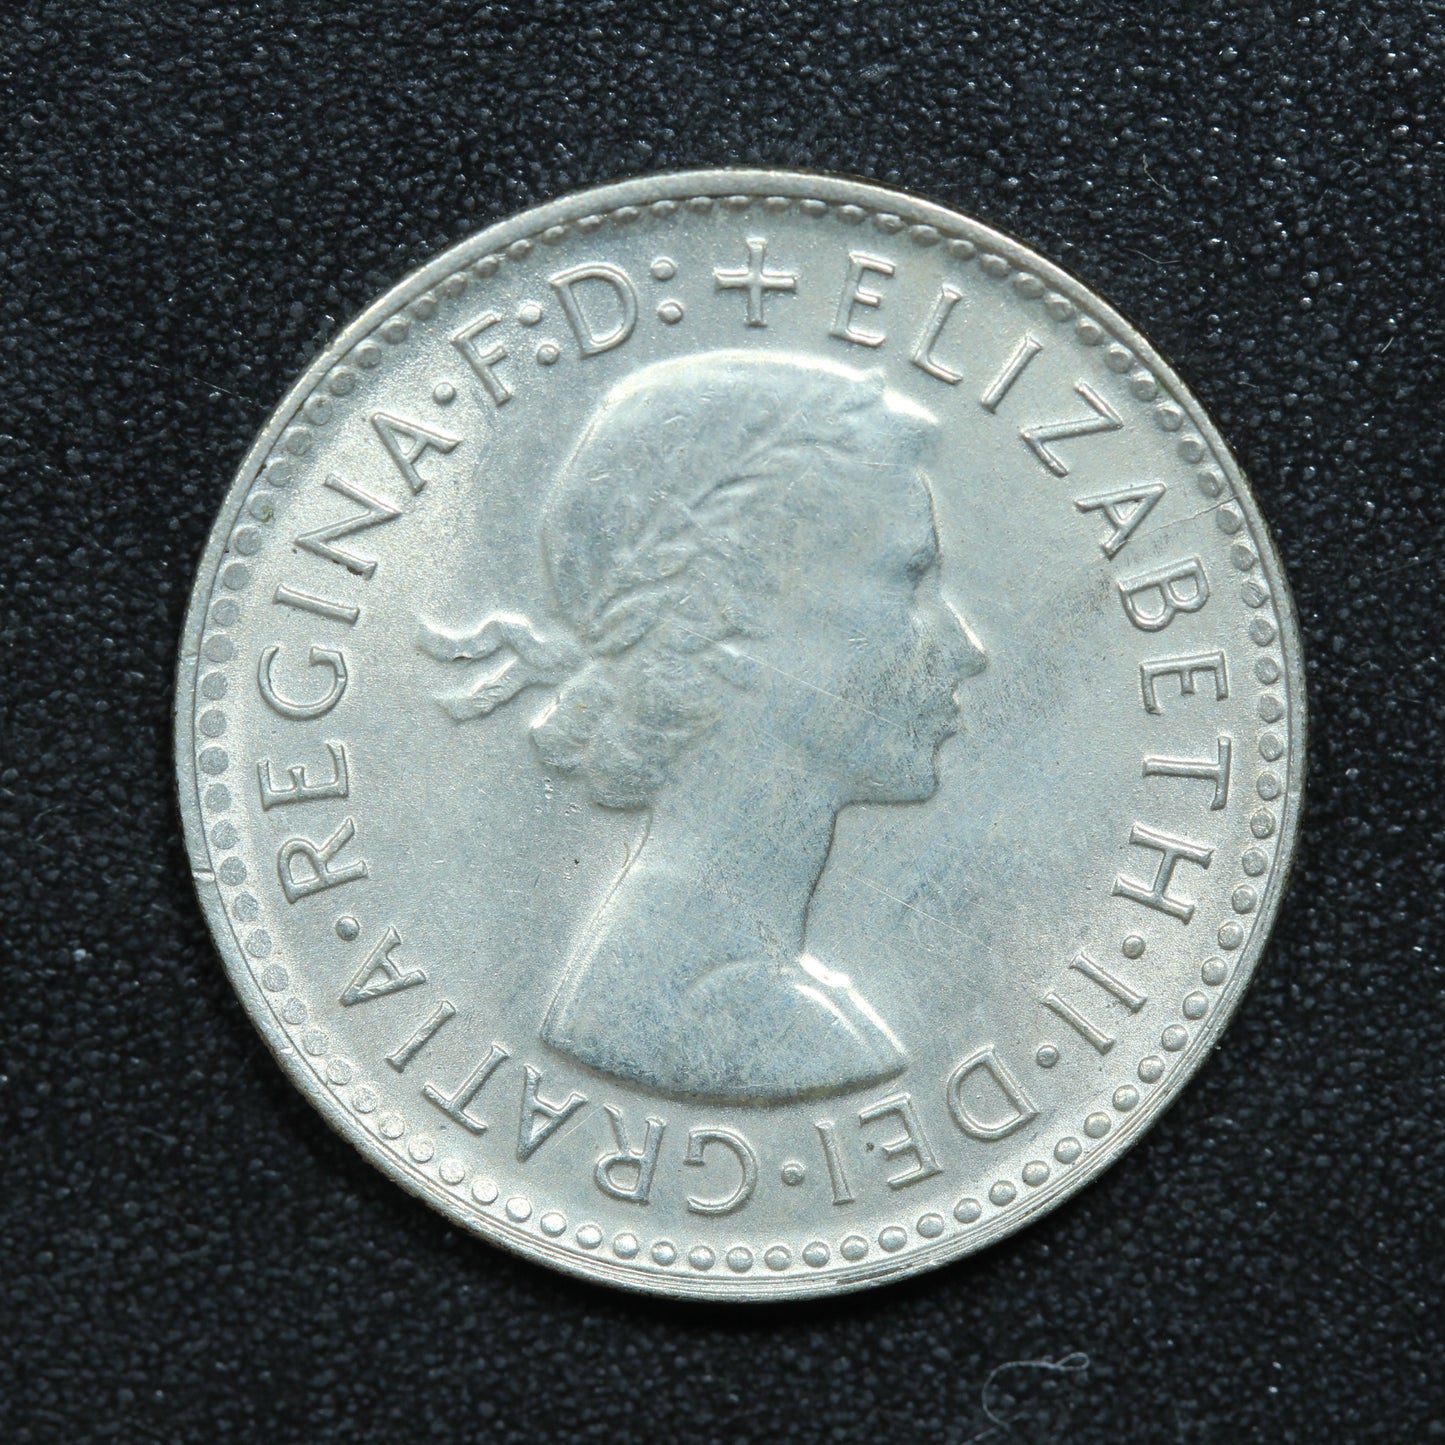 1960 Australia Threepence Silver Coin - KM# 44